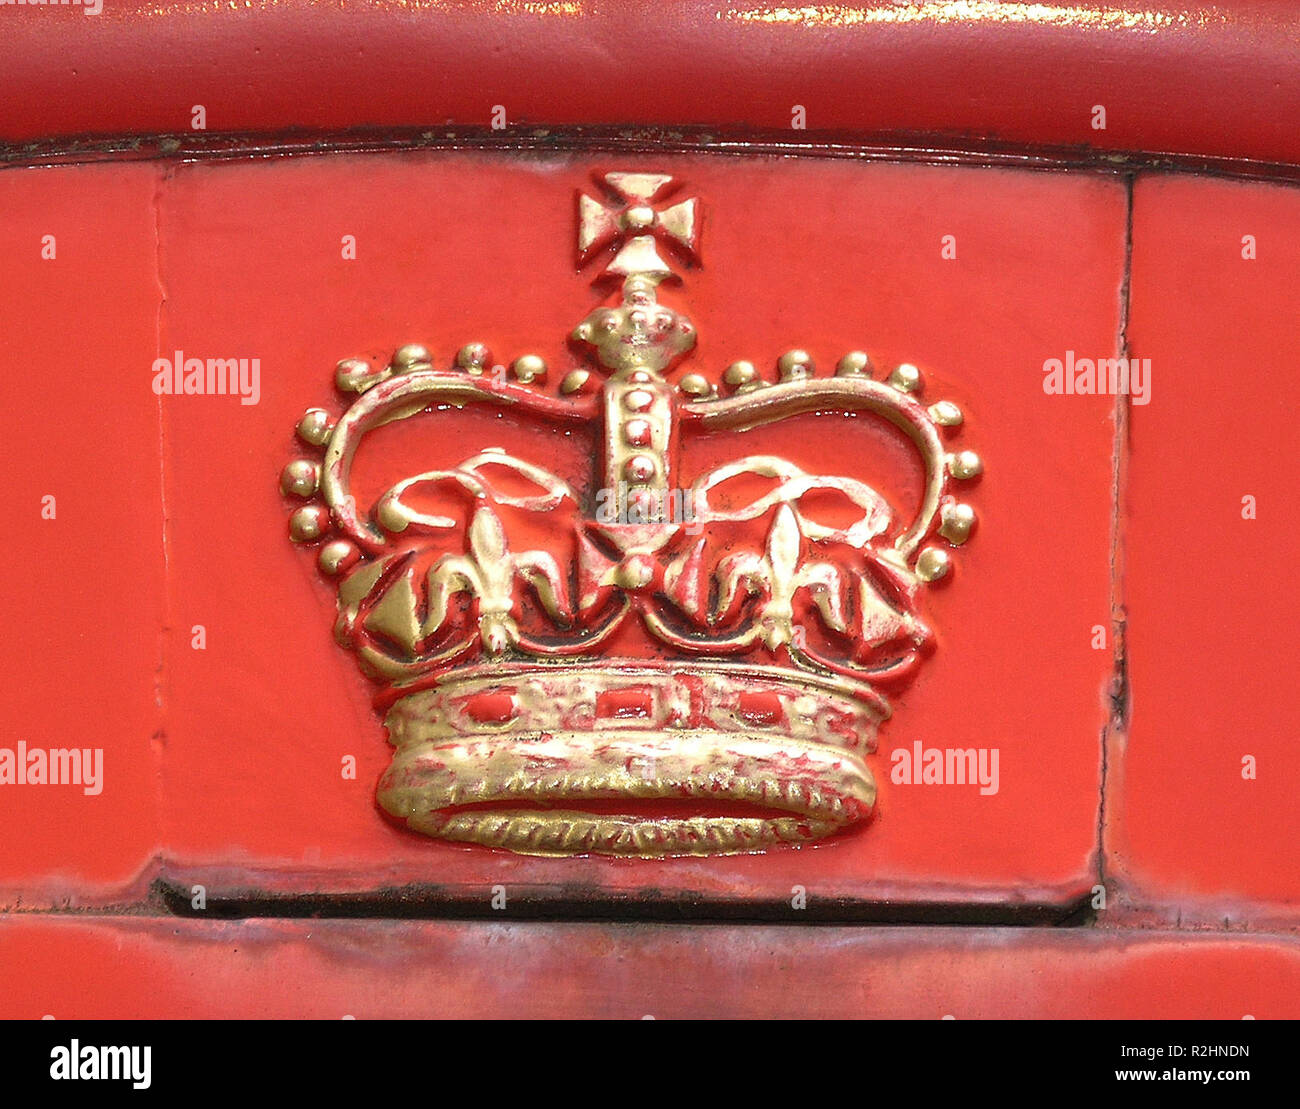 KIOSK RED TELEPHONE BOX COAT HANGER USING THE CAST OF THE CROWN OF SCOTLAND K6 